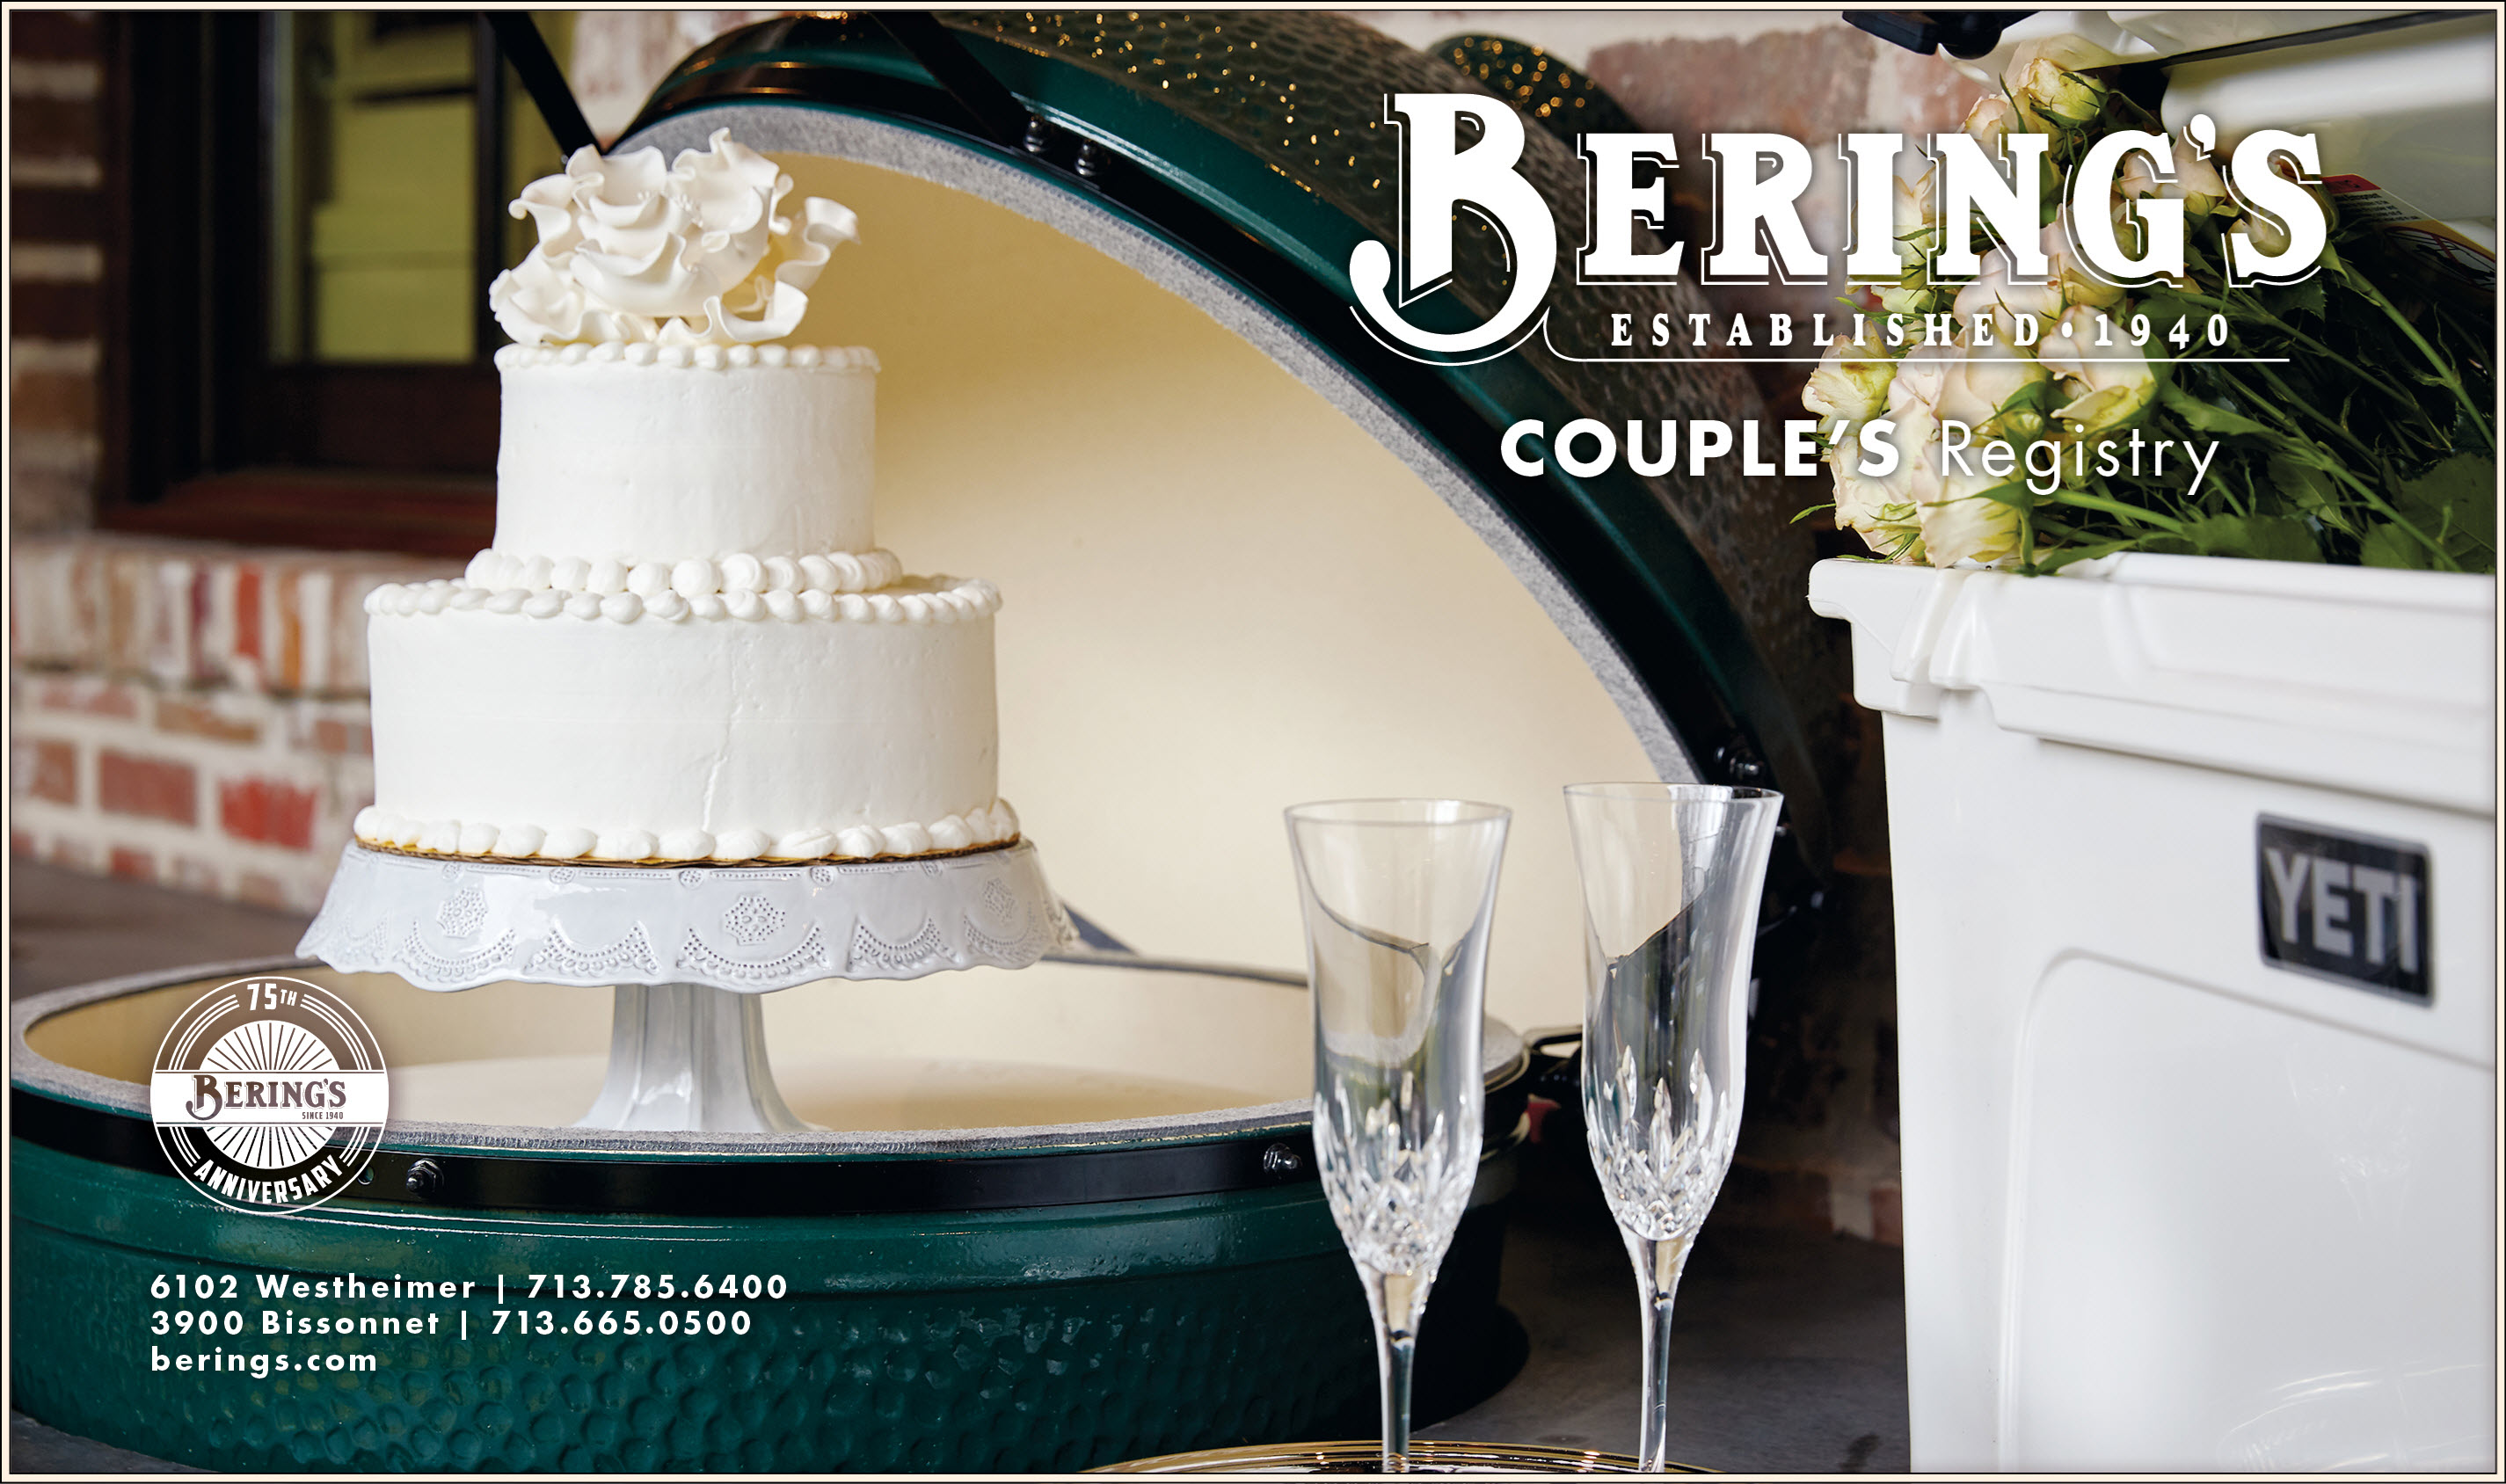 Bering's Wedding and Couple's Registry